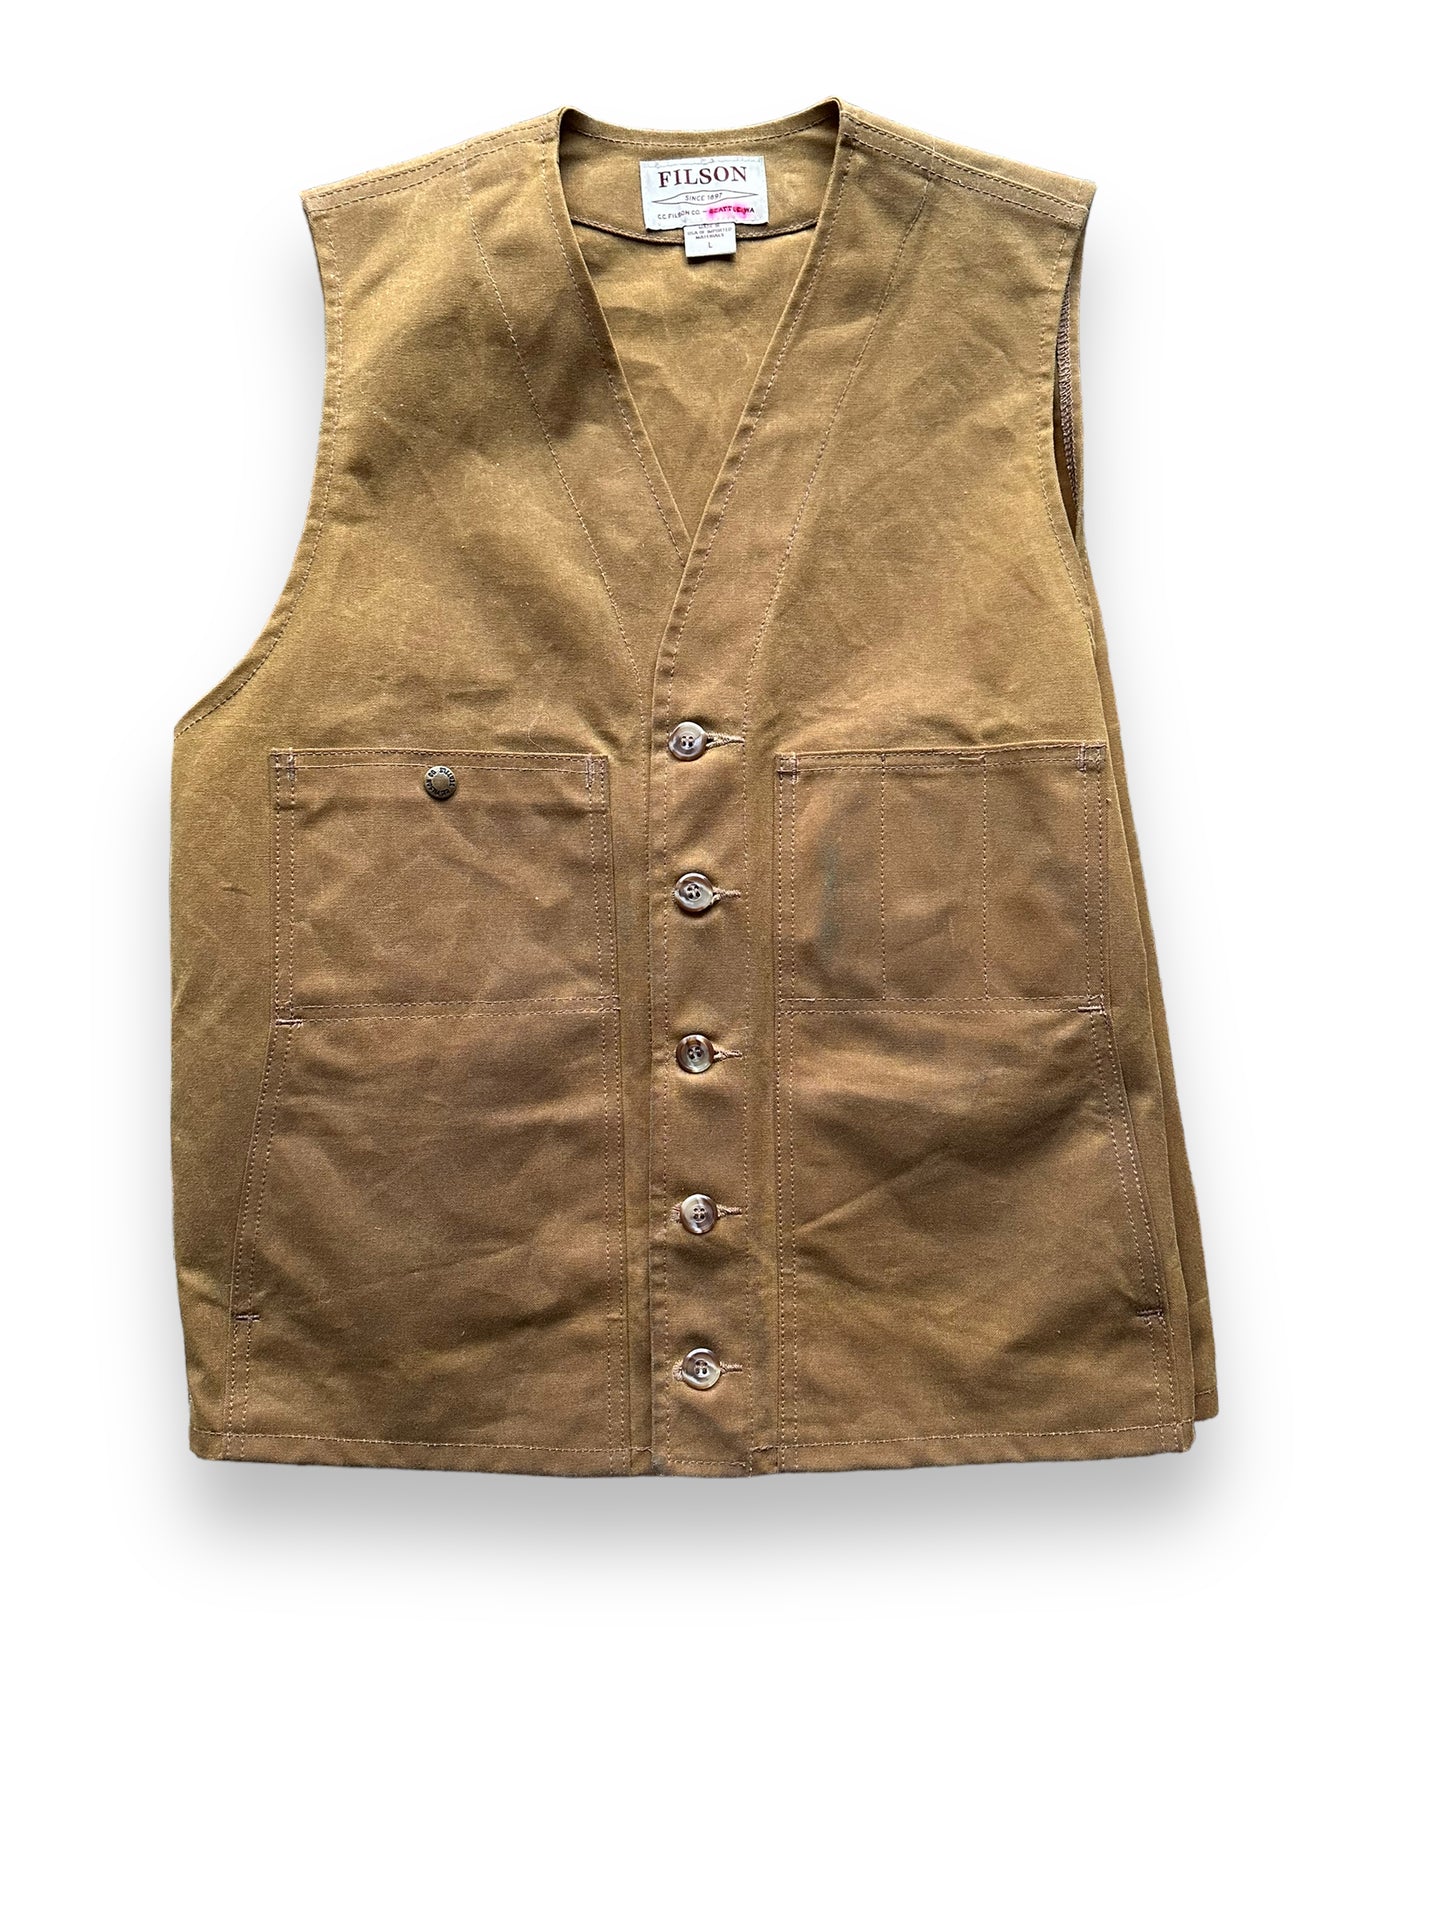 Front View of Filson Tin Cloth Vest SZ L | Filson Bargain Outlet Seattle | Barn Owl Vintage